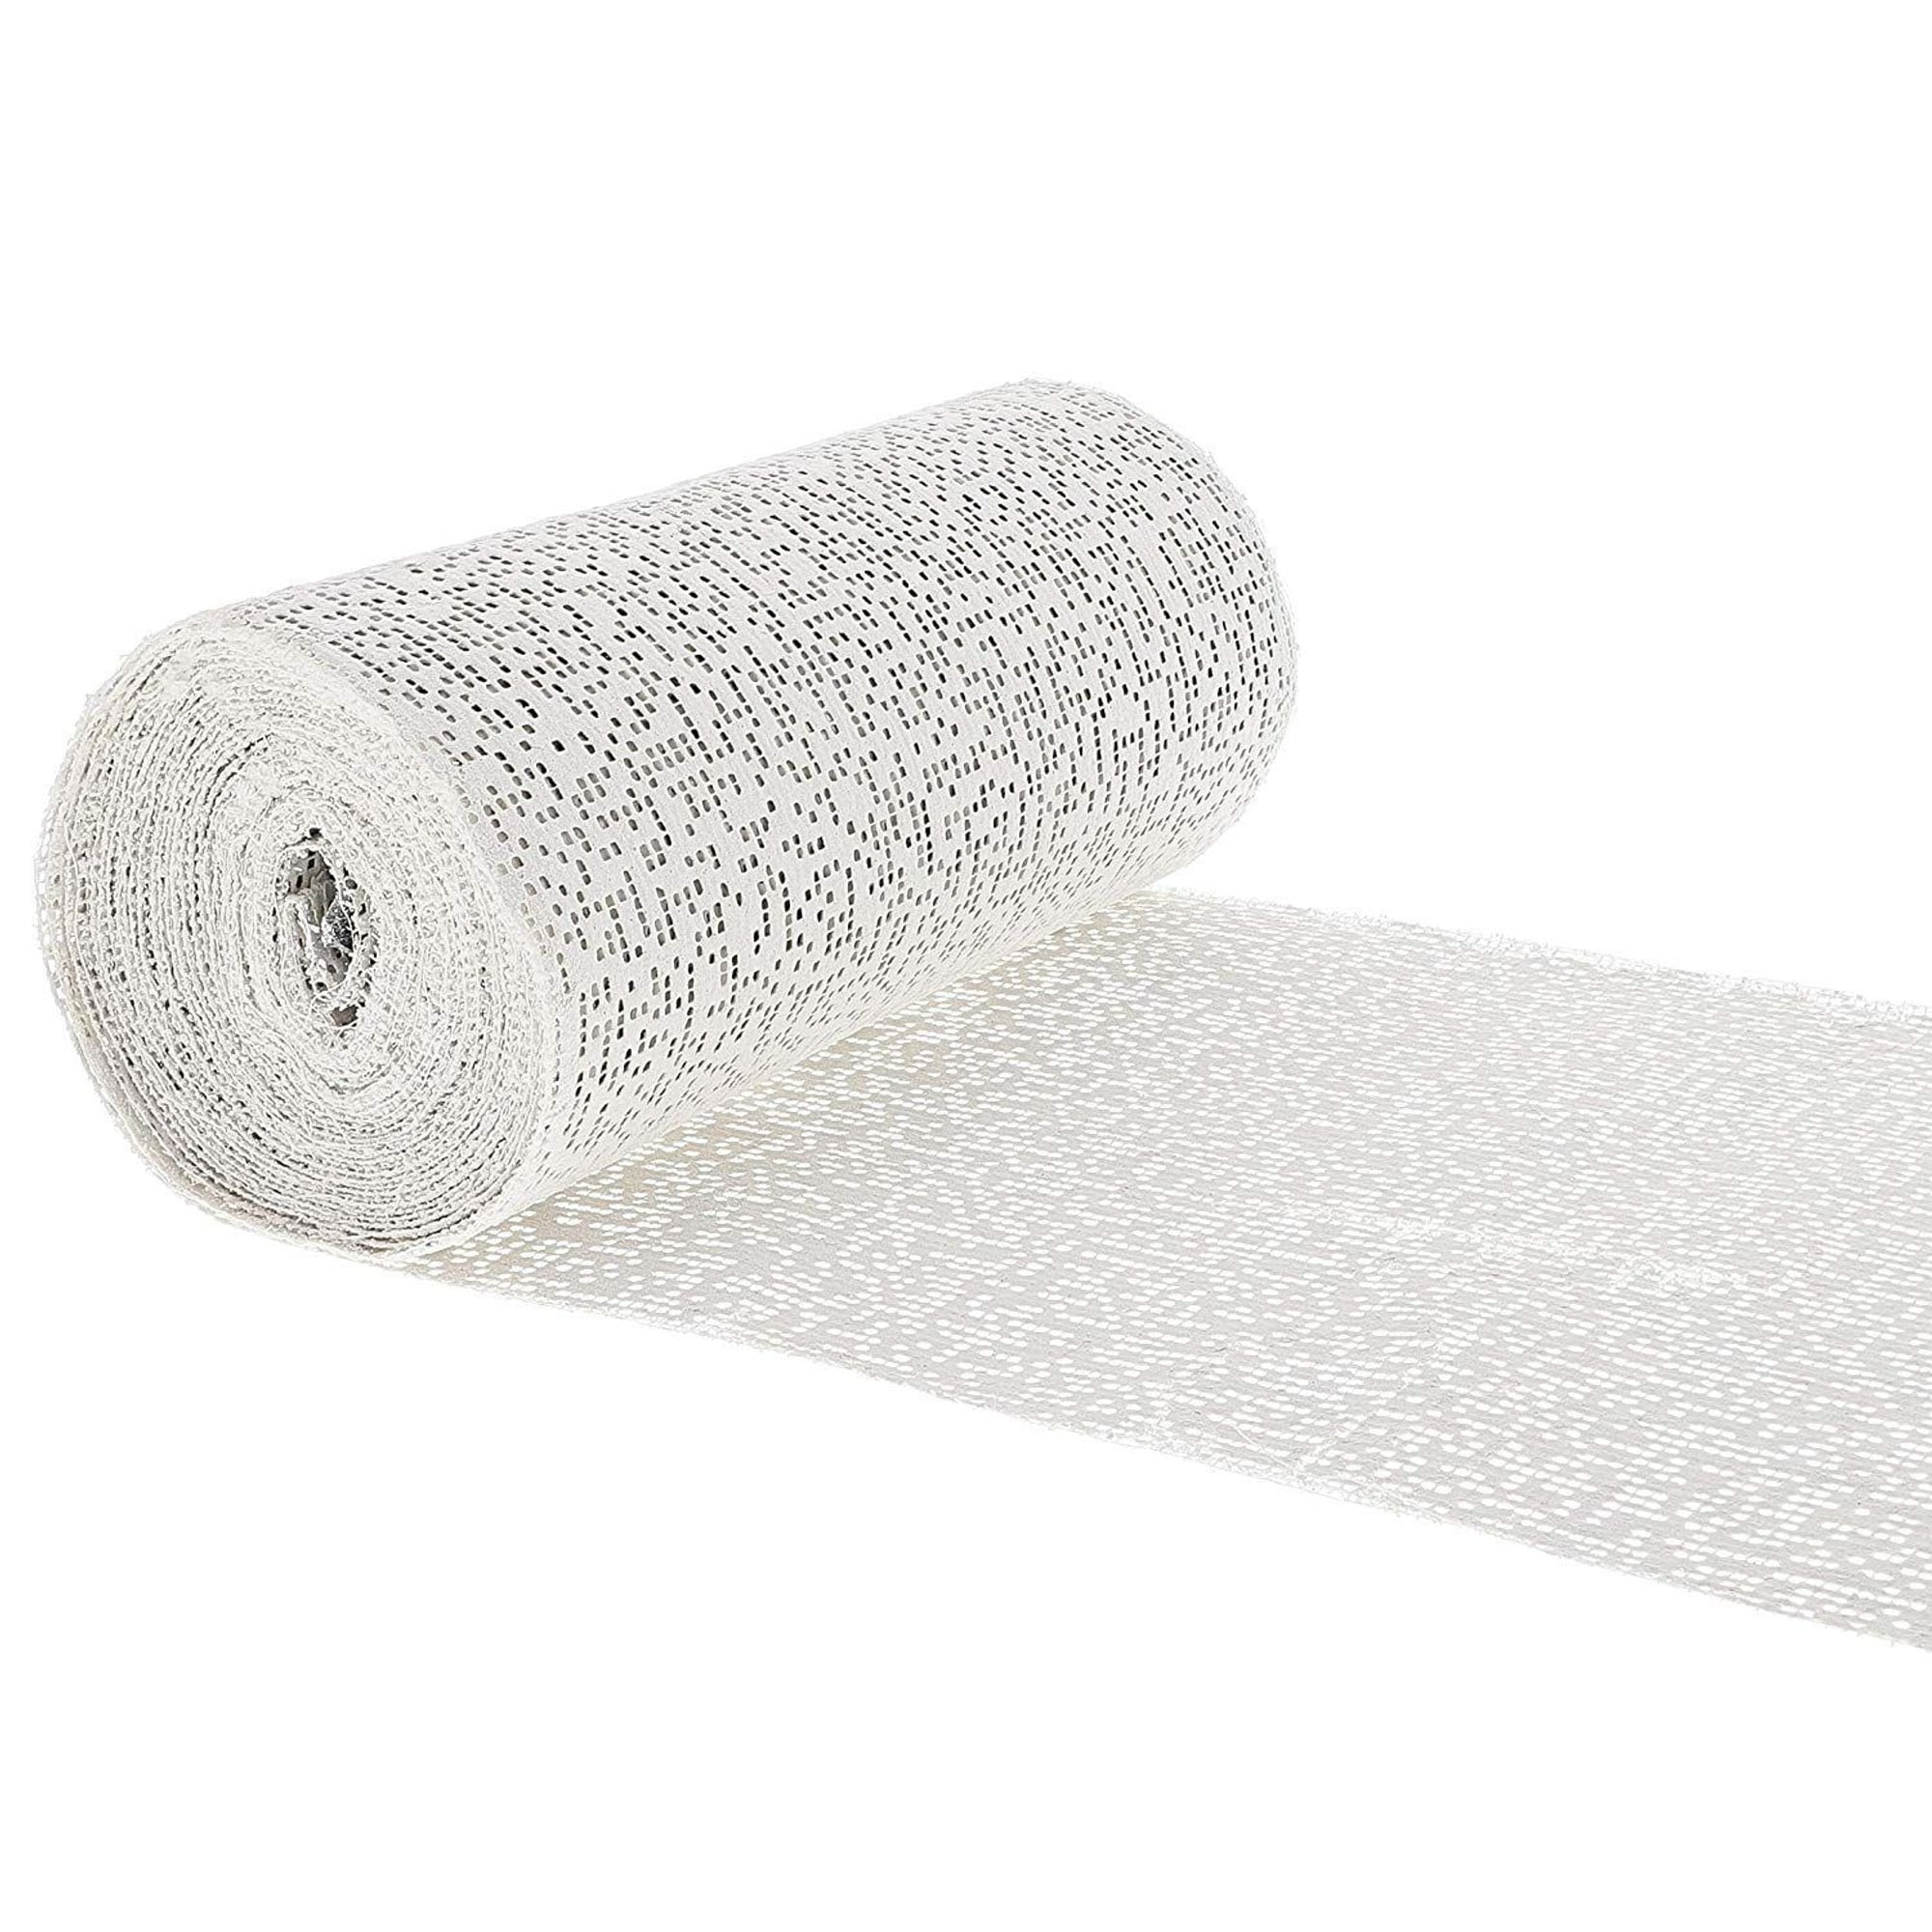 Noch 60980 Plaster Cloth Roll - 39.4 x 78.7 100 x 200cm (Pack of